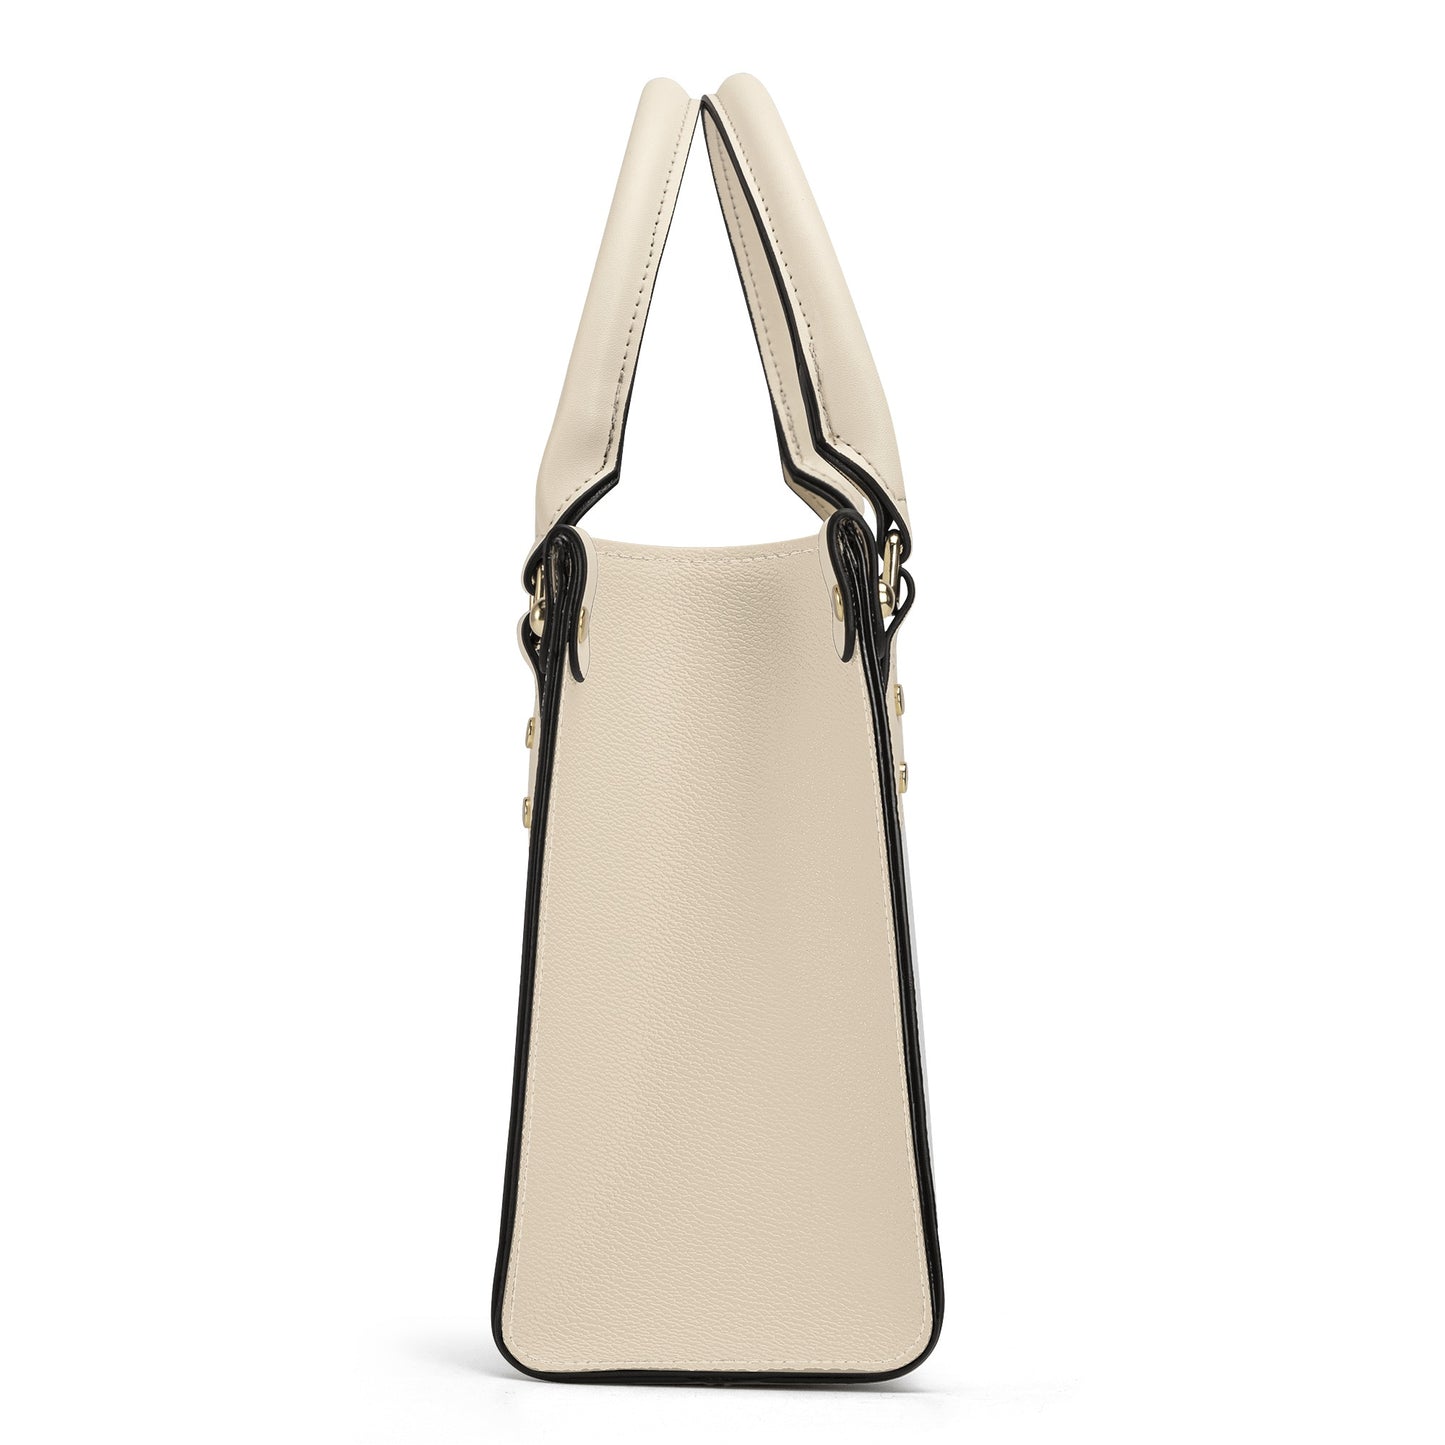 Donna - Luxury Women Handbag